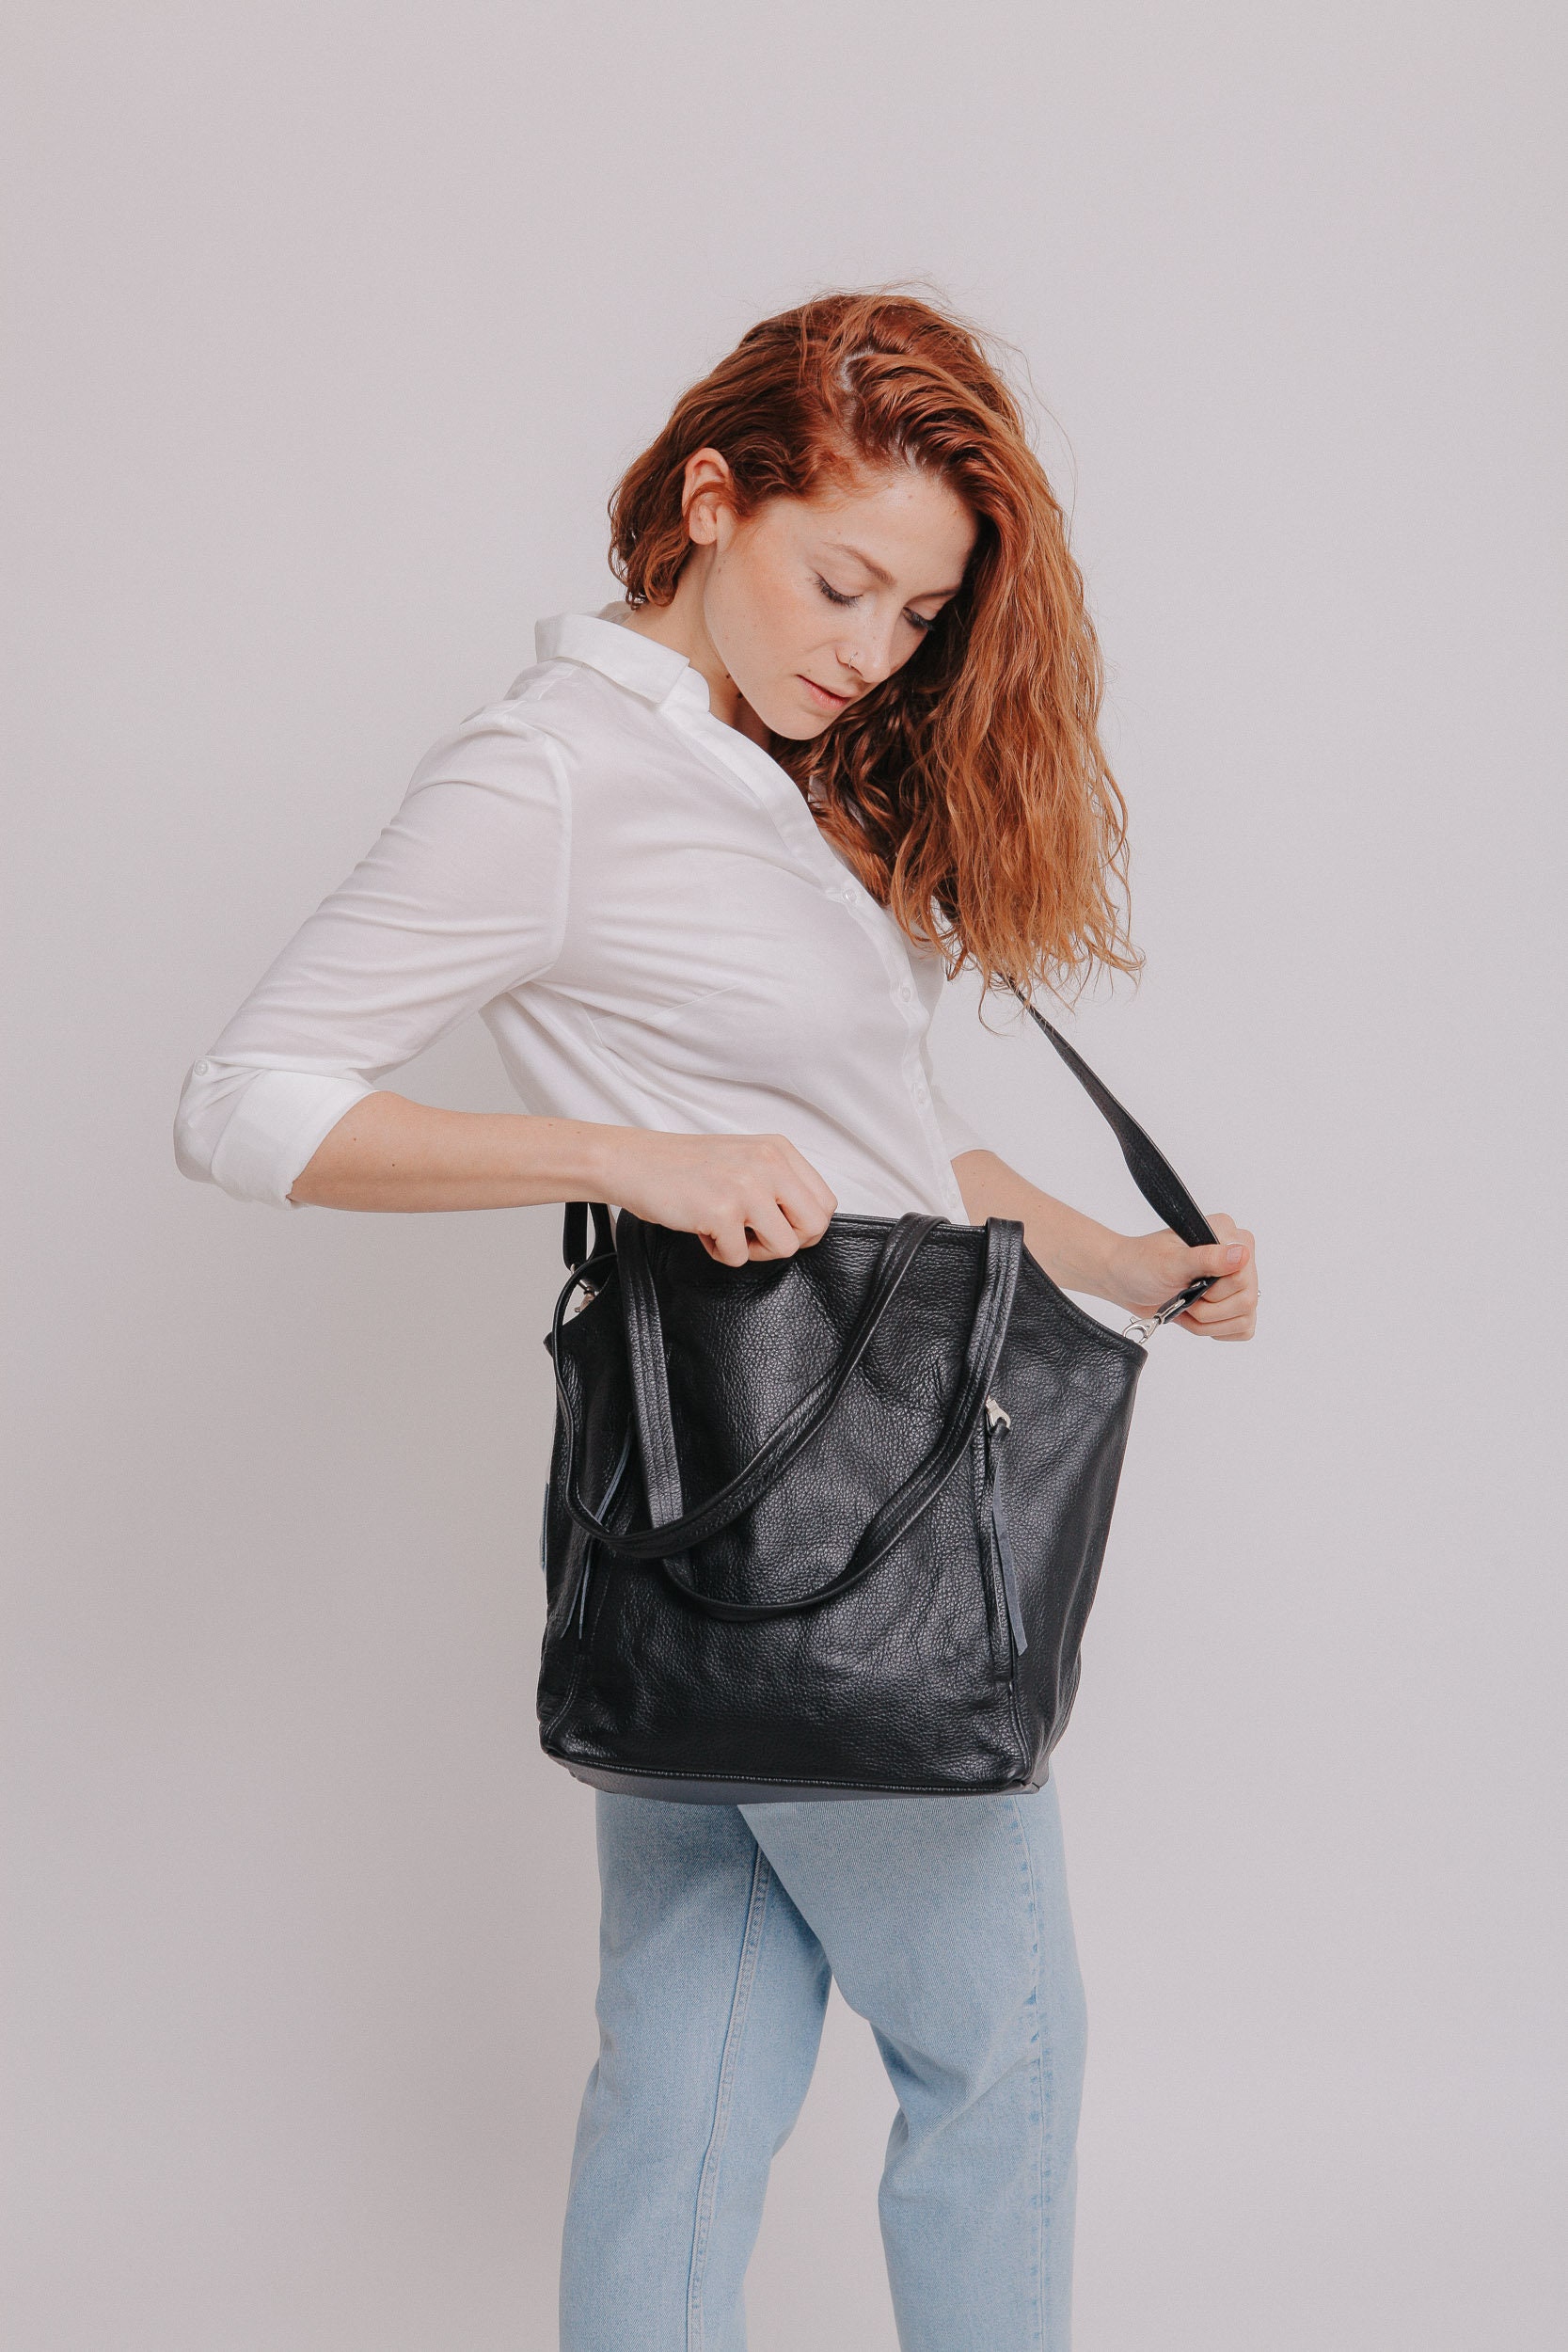 Big Sac Shoulder Bags for Women 2022 Winter Large Tote Shopper Quality Soft  Leather Luxury Crossbody Handbag Lady Travel Bag